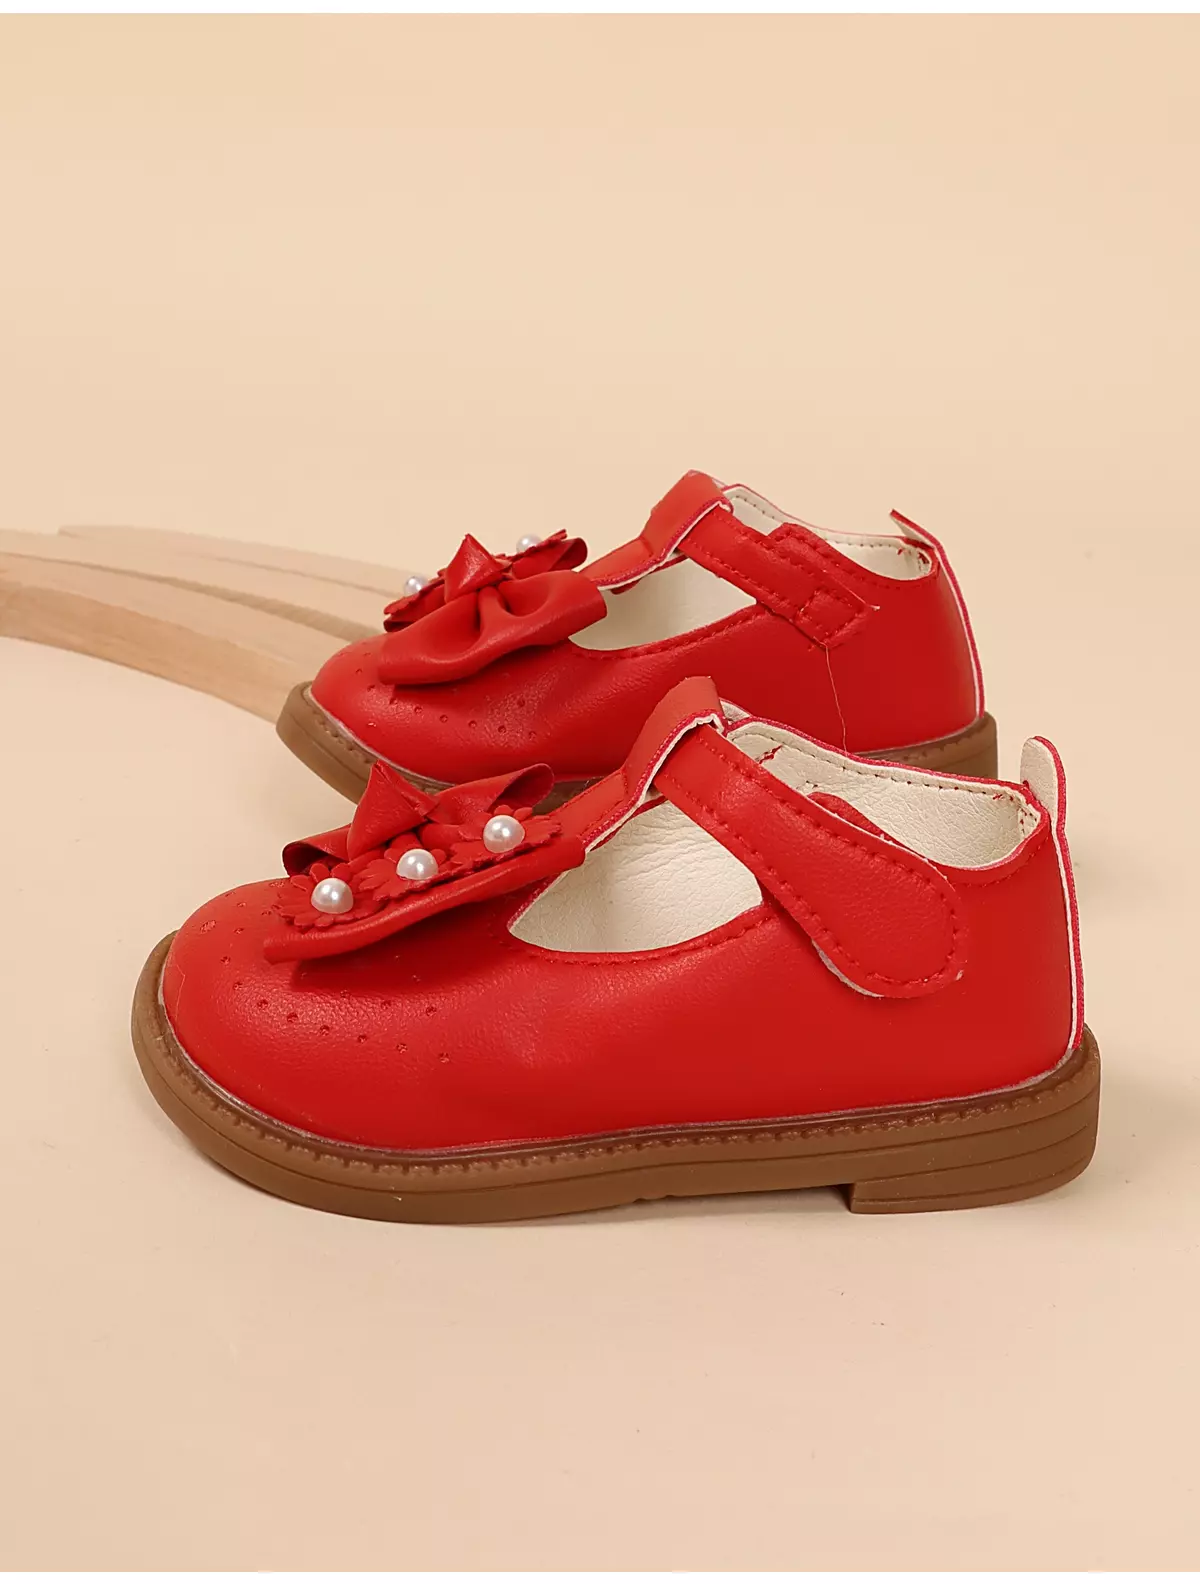 Pantofiori Lady Grace rosu